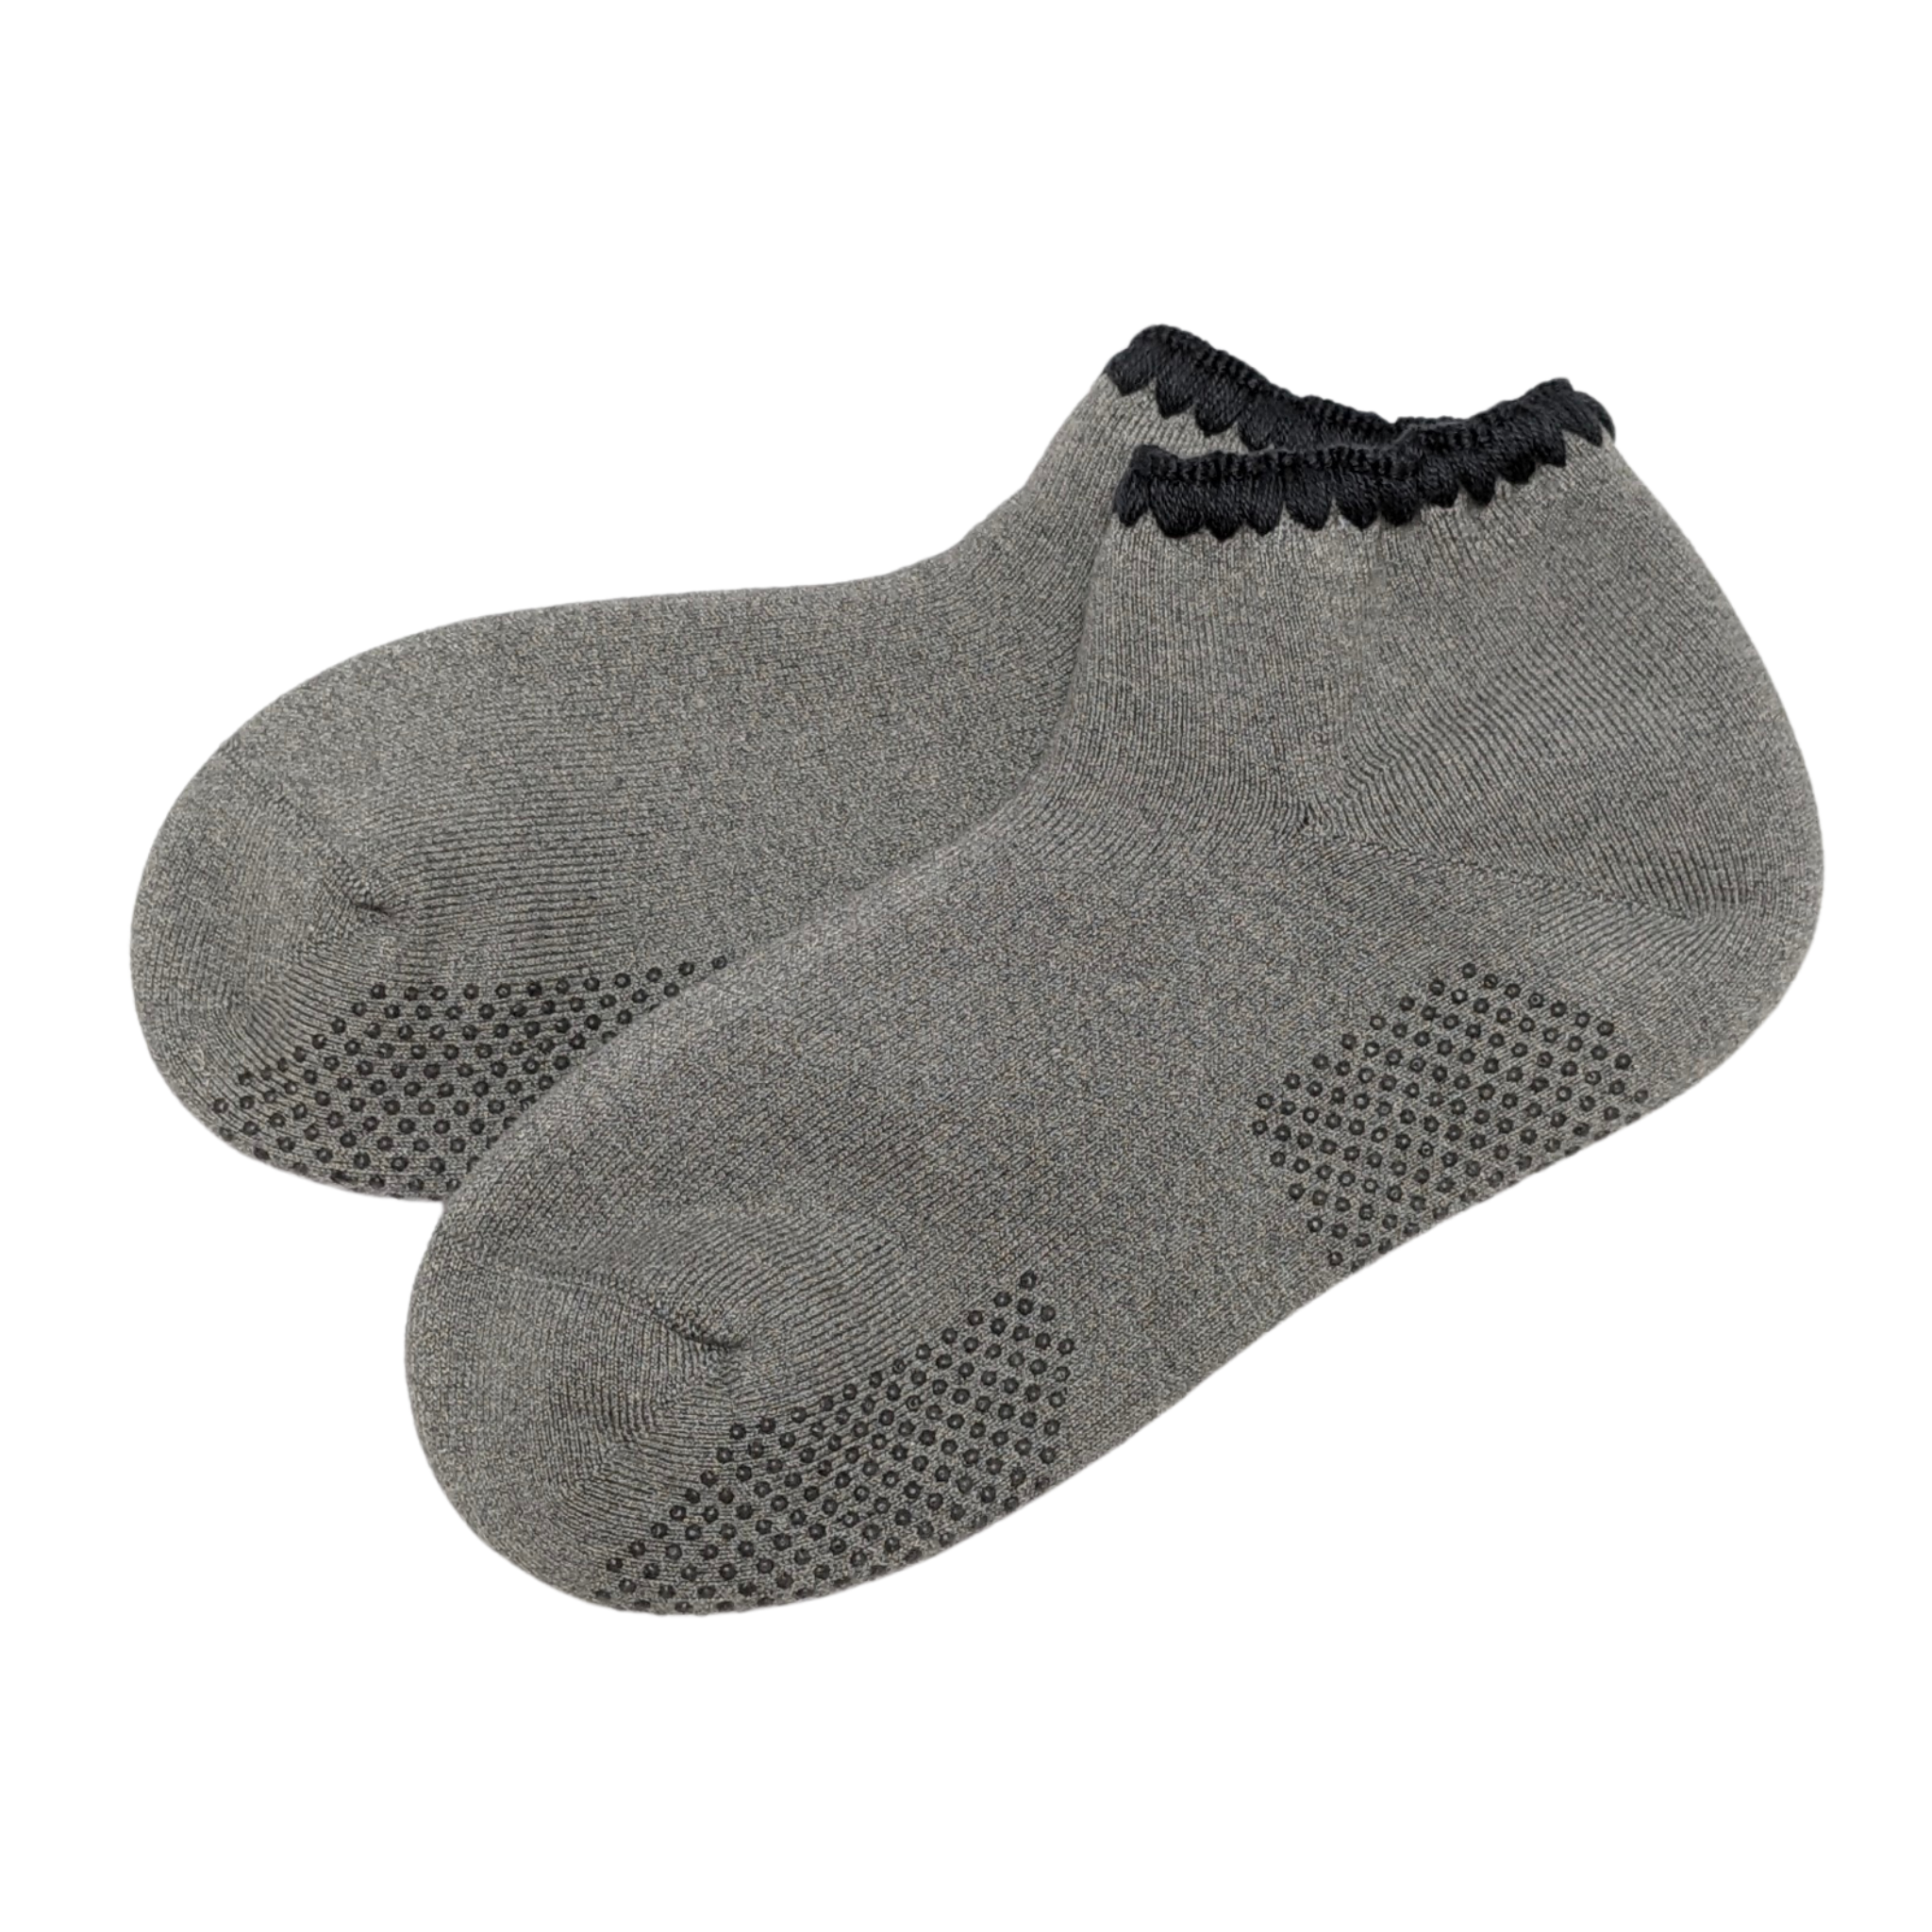 Handcrafted Silk Blend Slipper Socks With Grips Unisex - CHERRYSTONEstyle